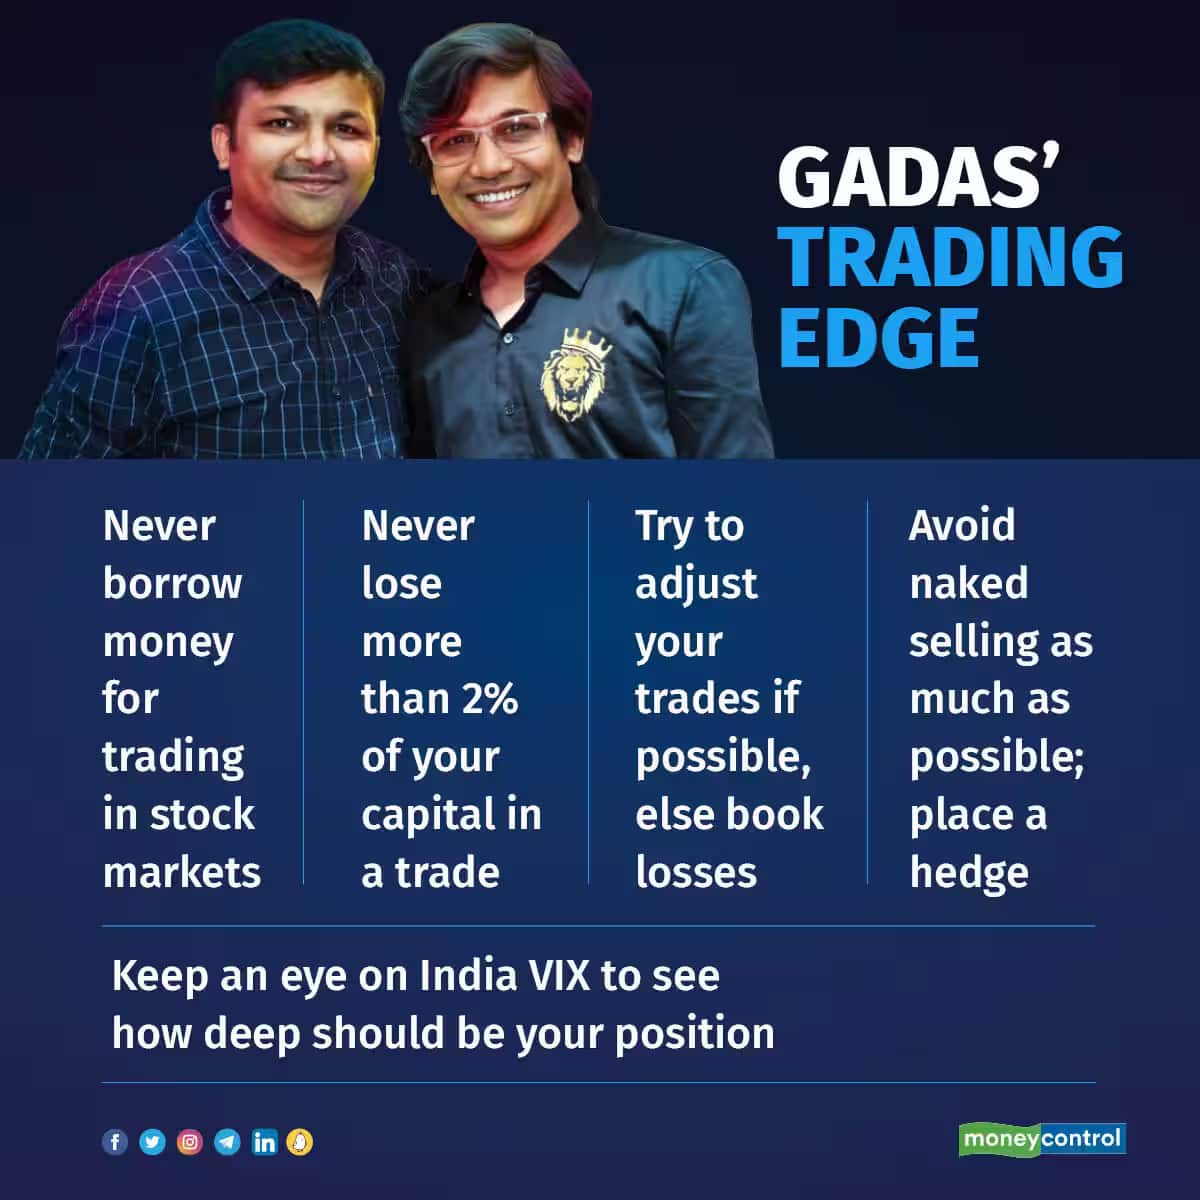 Gadas’ Trading Edge